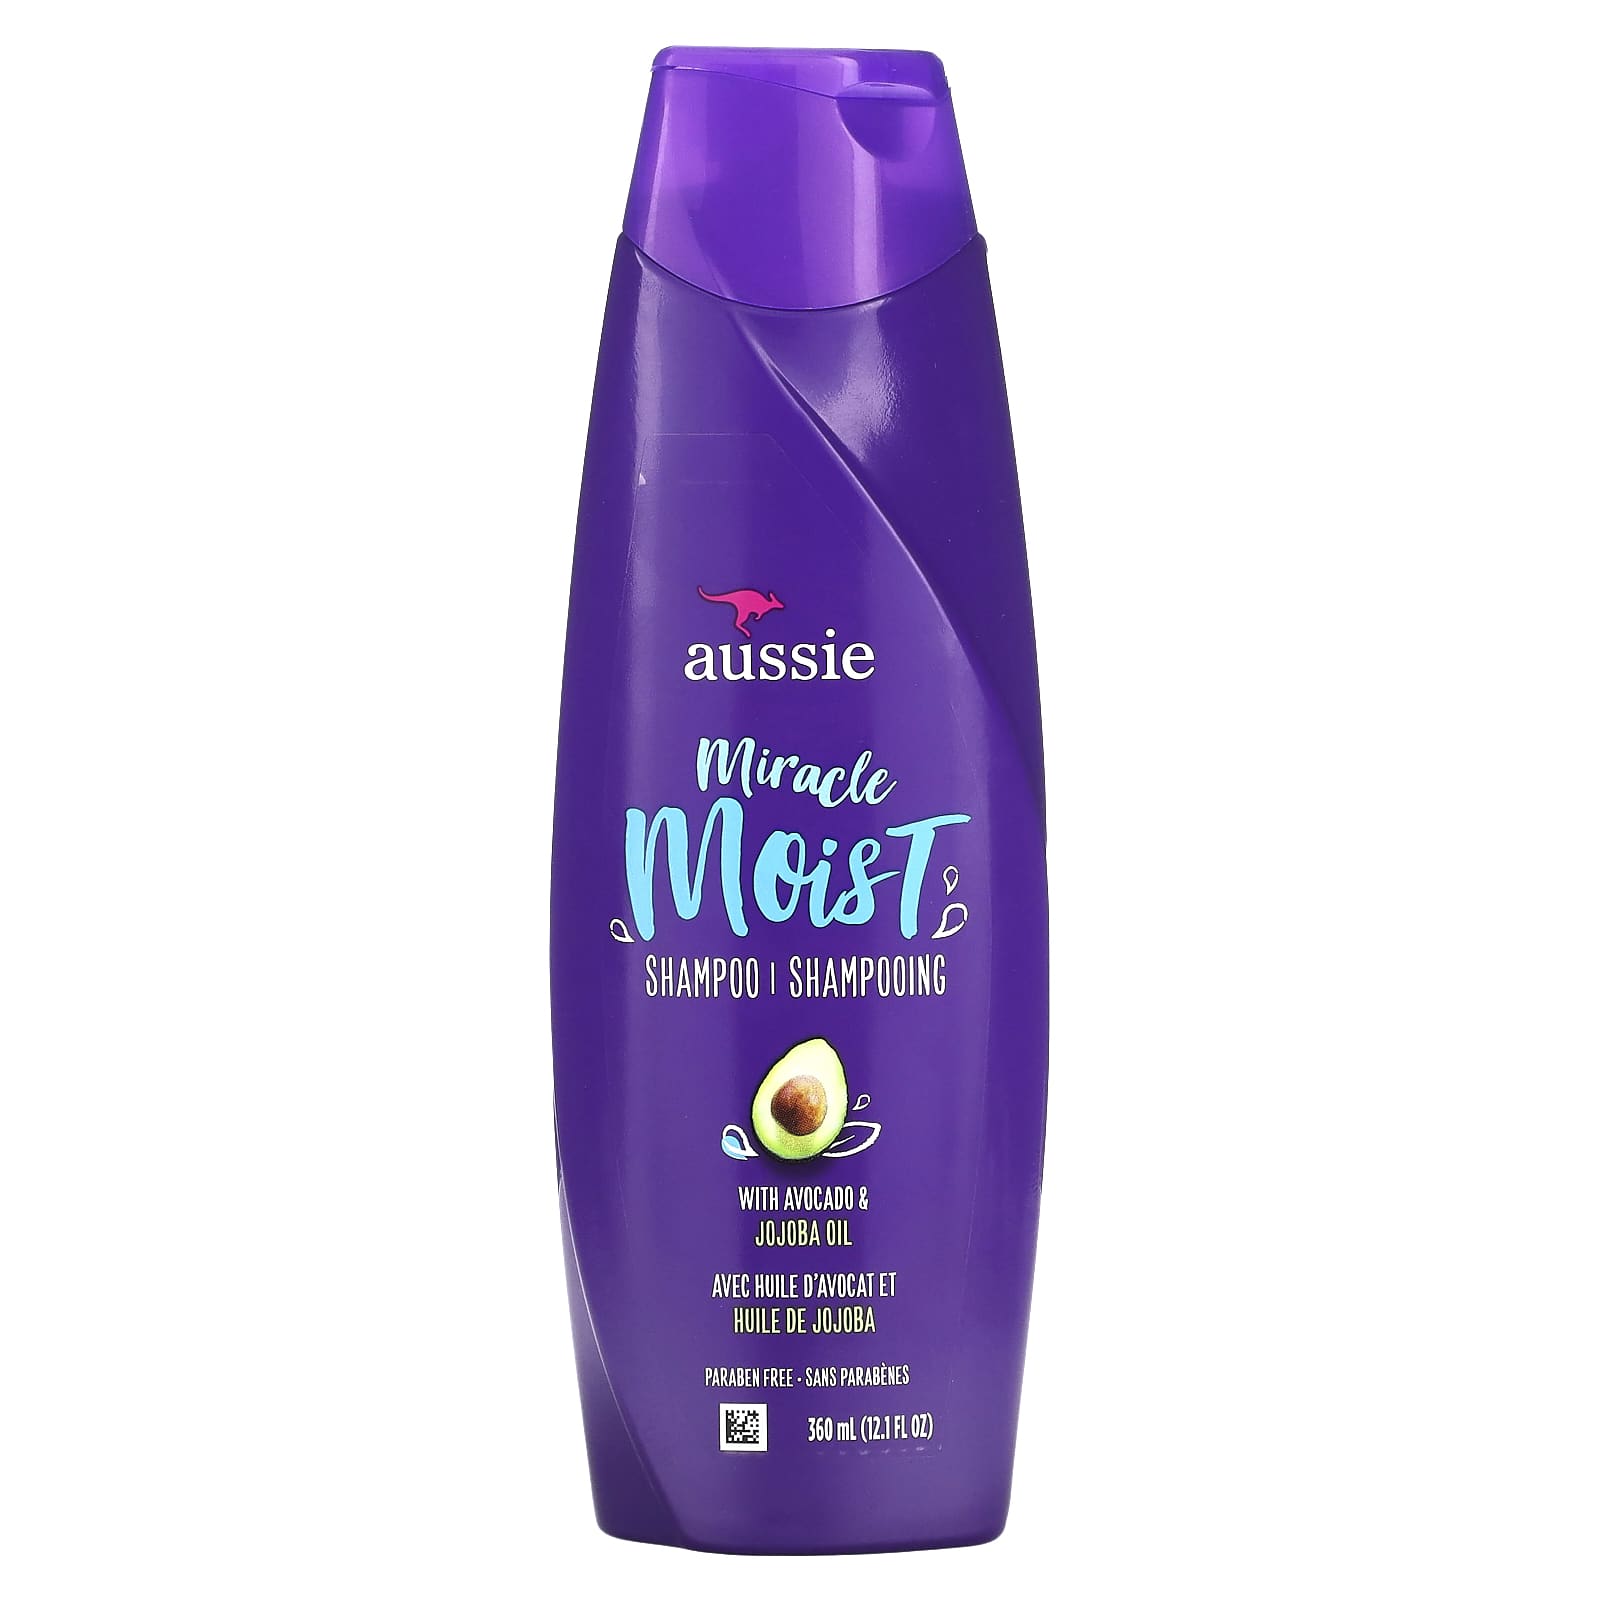 Aussie, Miracle Moist Shampoo, & Jojoba Oil, 12.1 fl oz (360 ml)